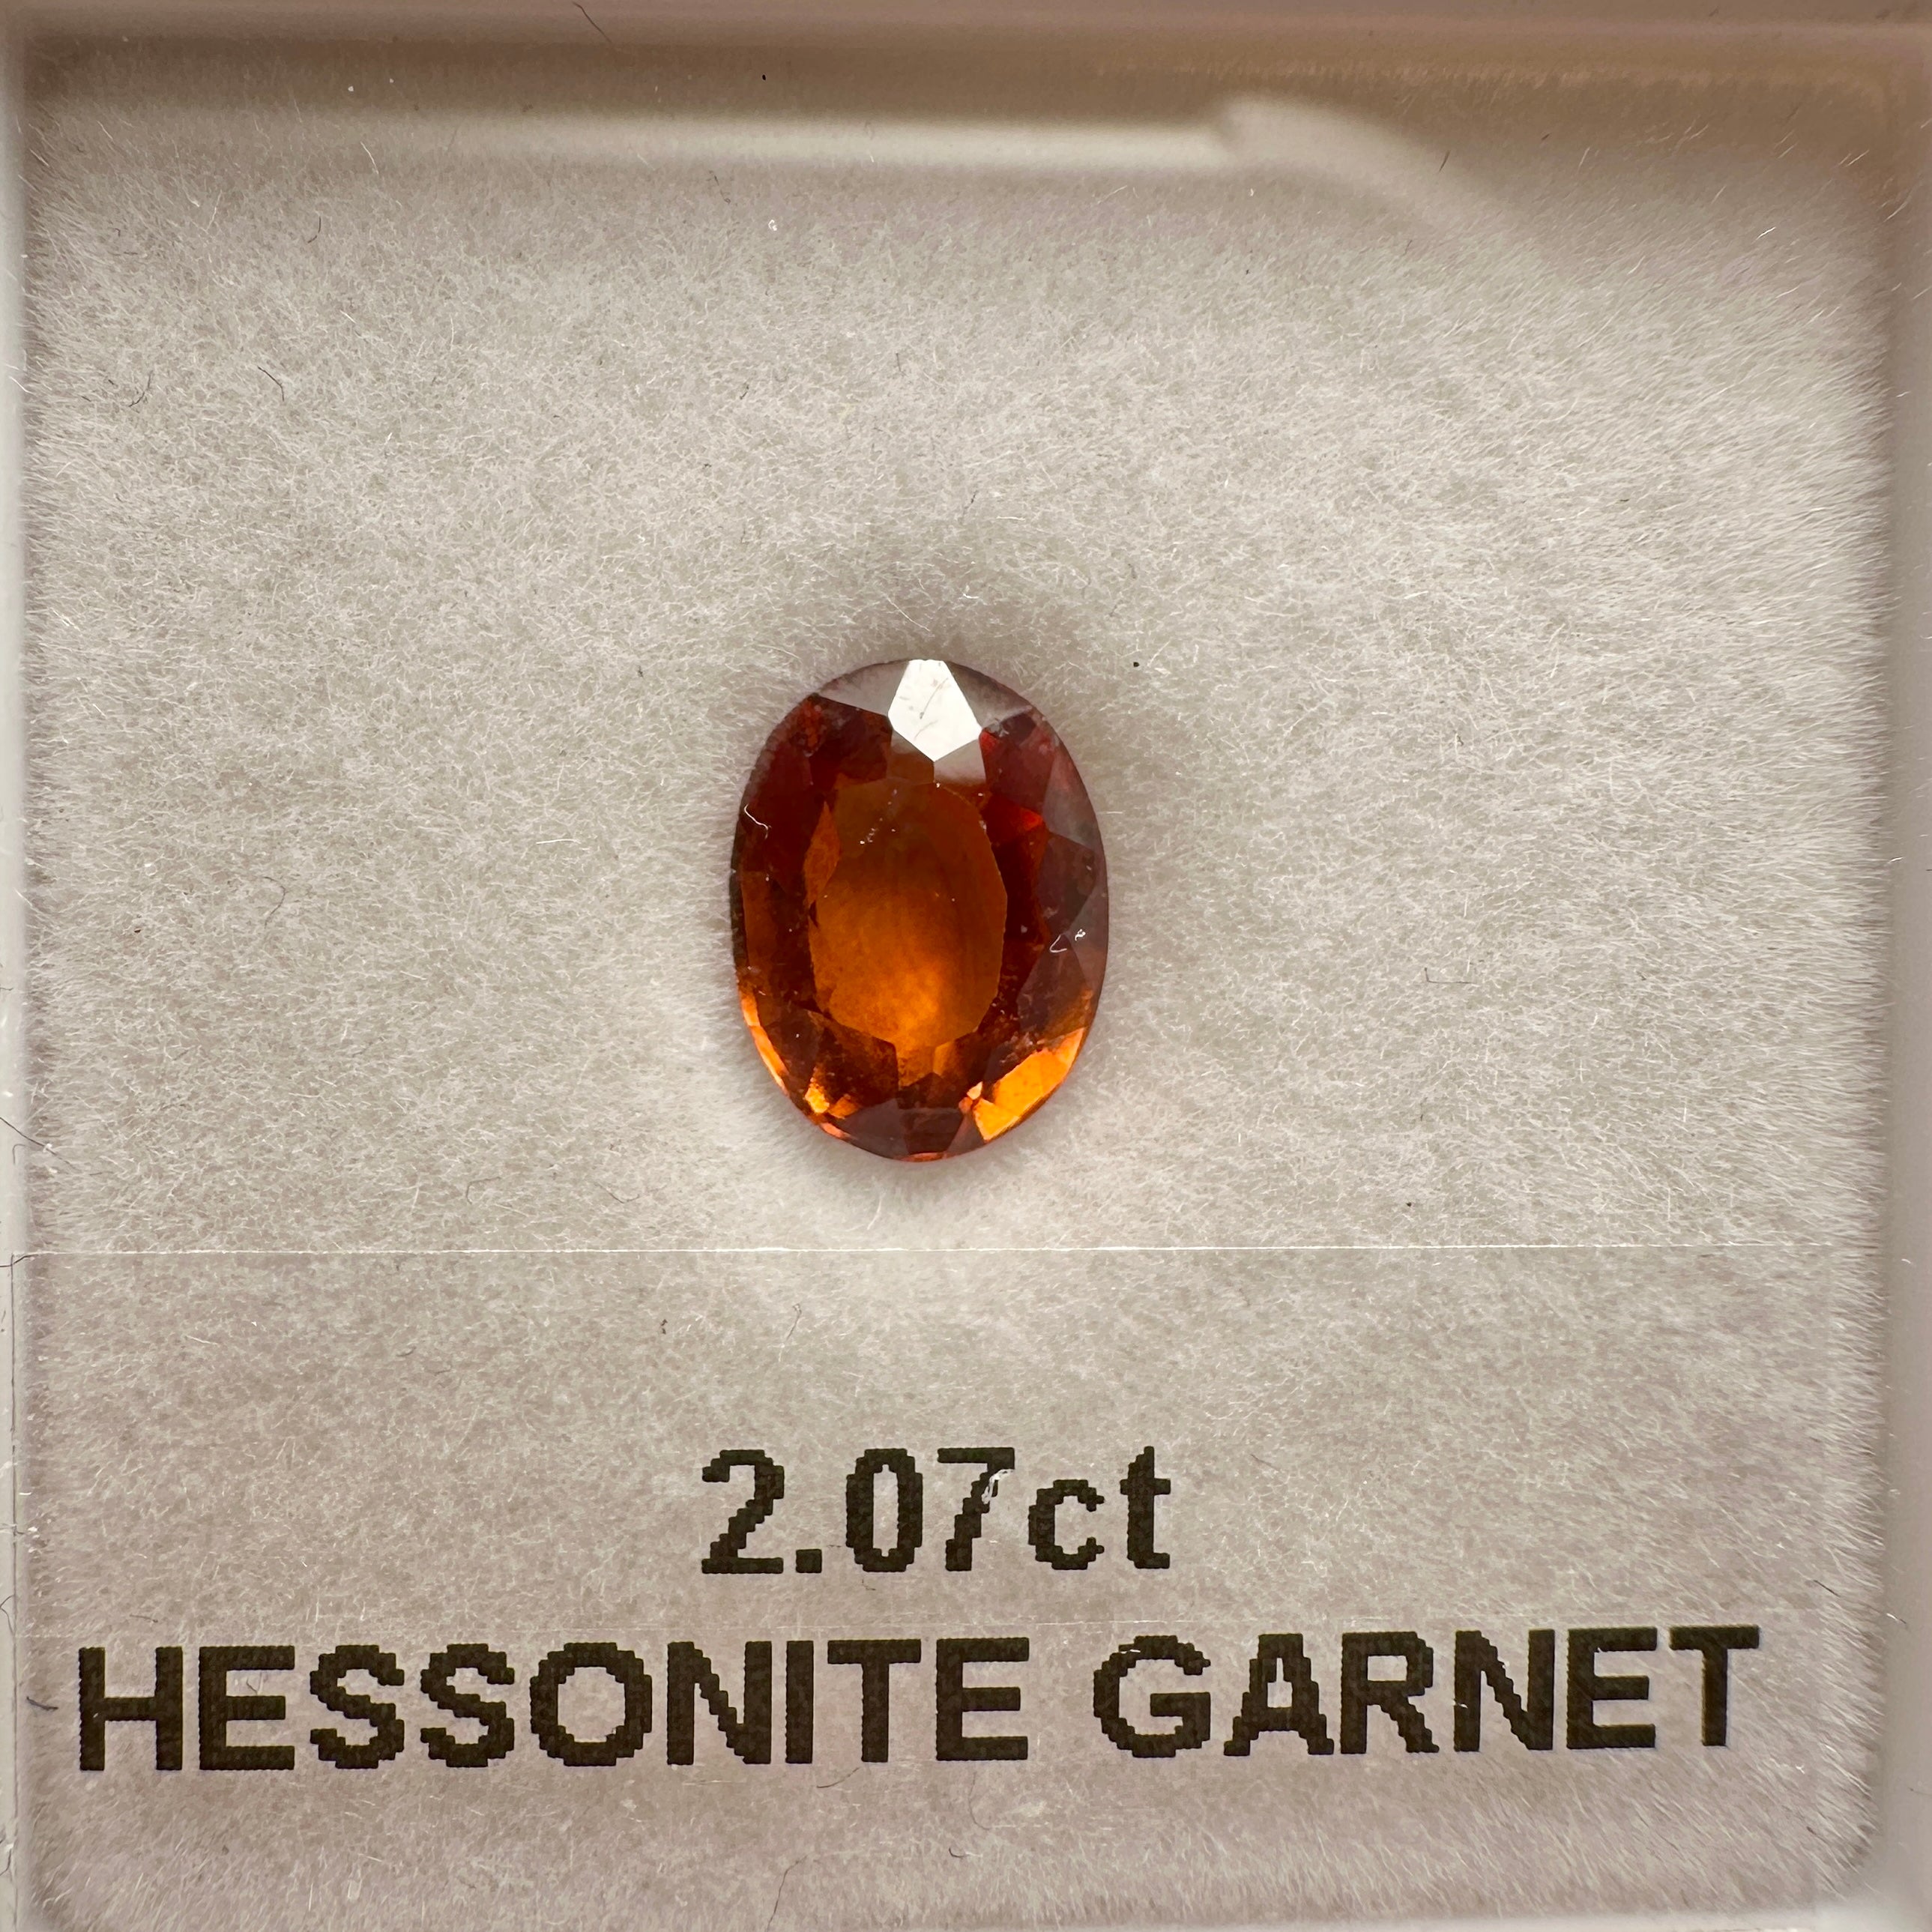 2.07ct Hessonite Garnet, Untreated Unheated, native cut